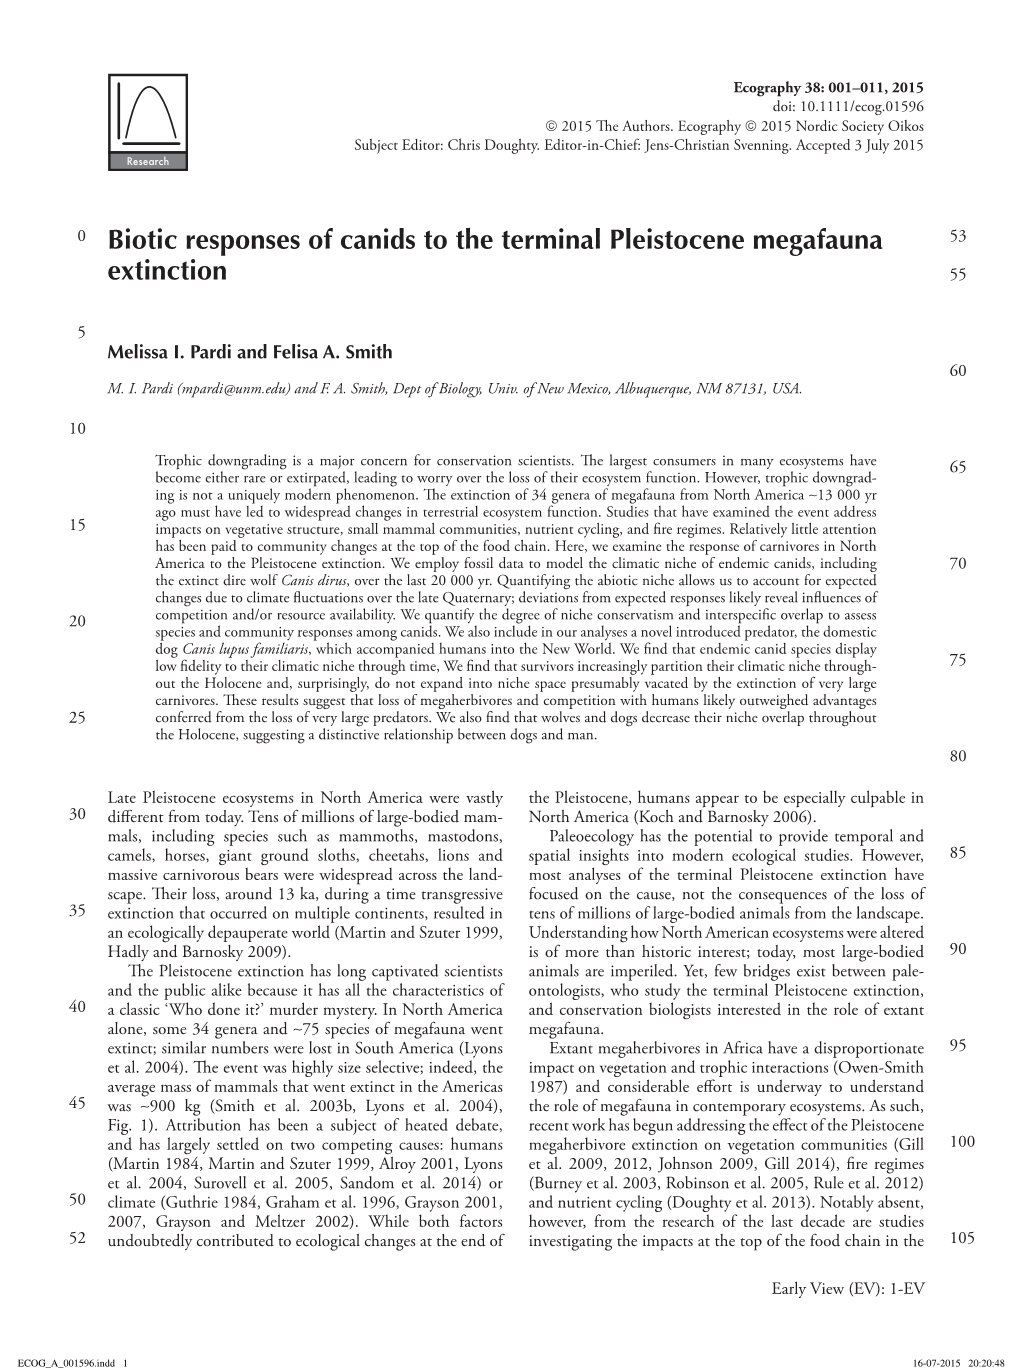 The Response of Canids to the Terminal Pleistocene Megafauna Extinction